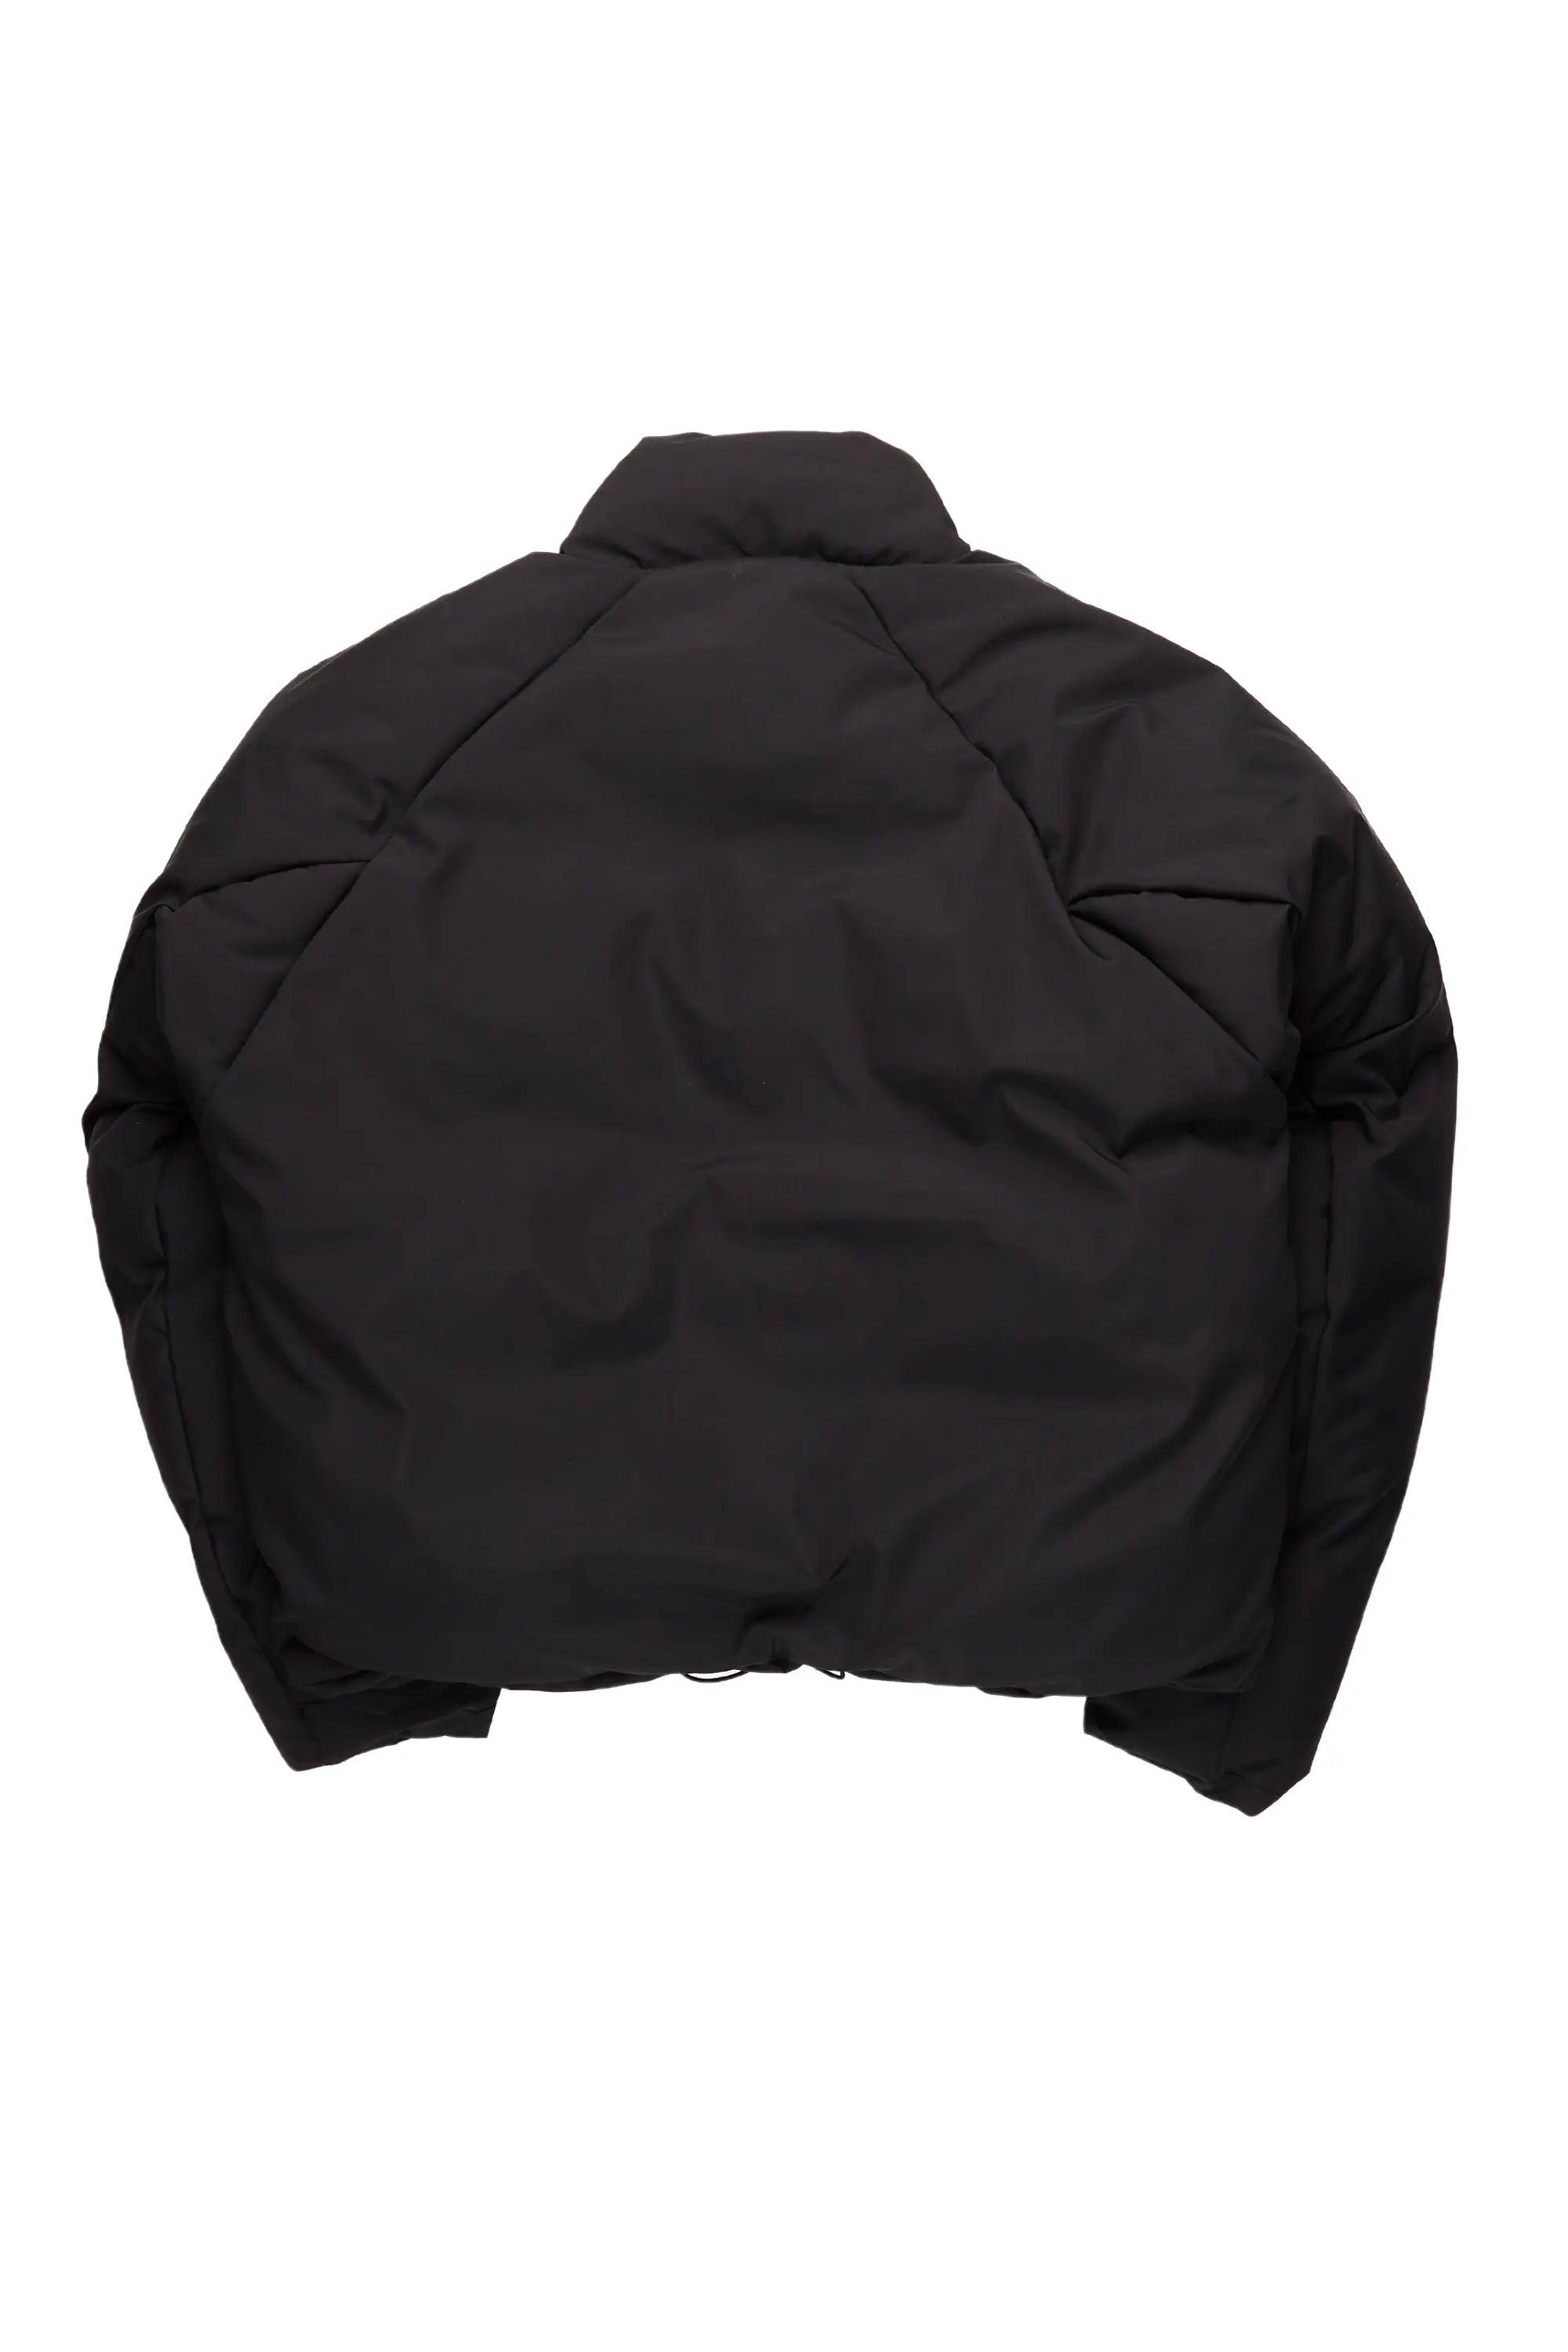 Damien Black Puffer Jacket